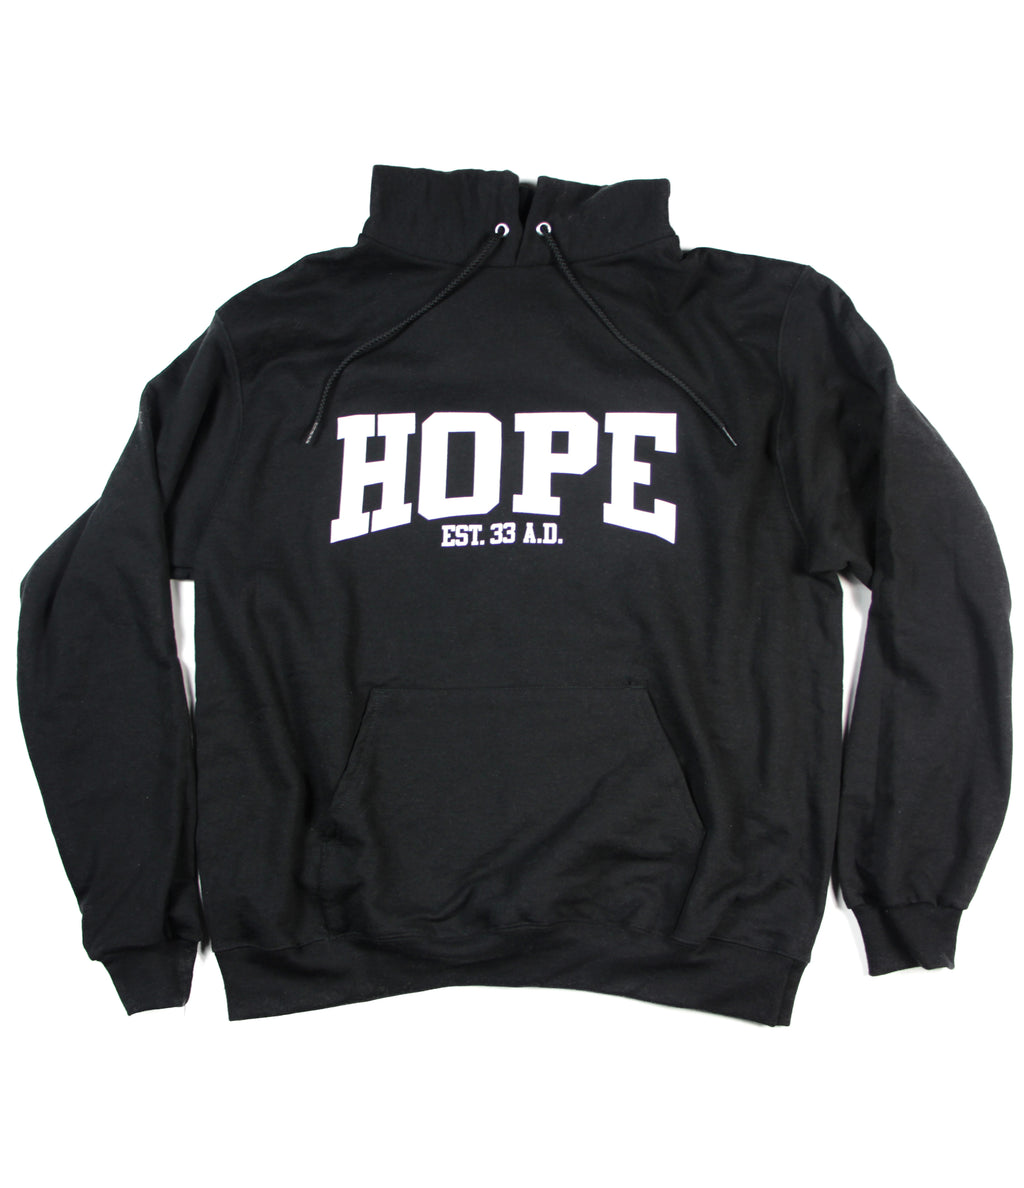 HOPE EST. 33 A.D. BLACK HOODIE